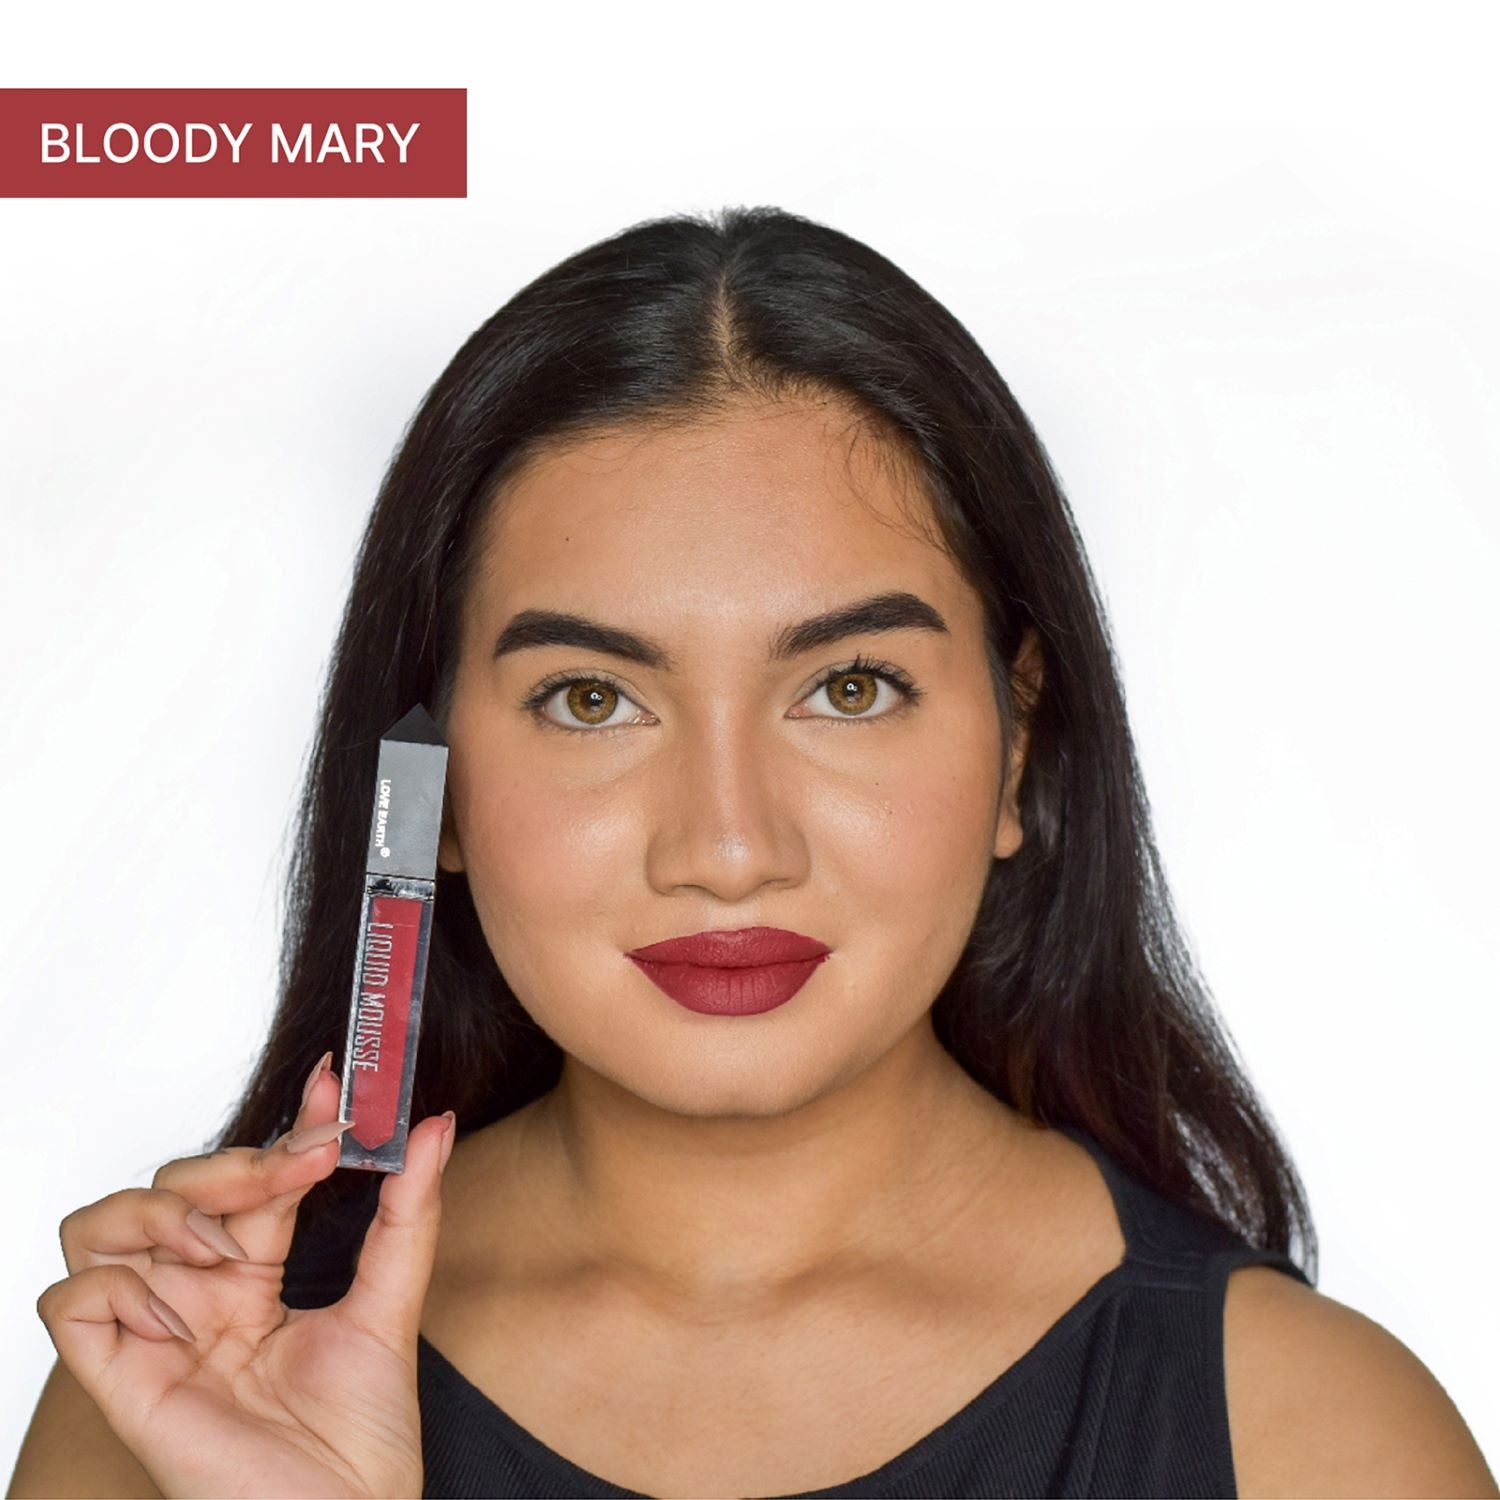 Liquid Lipstick - Bloody Mary